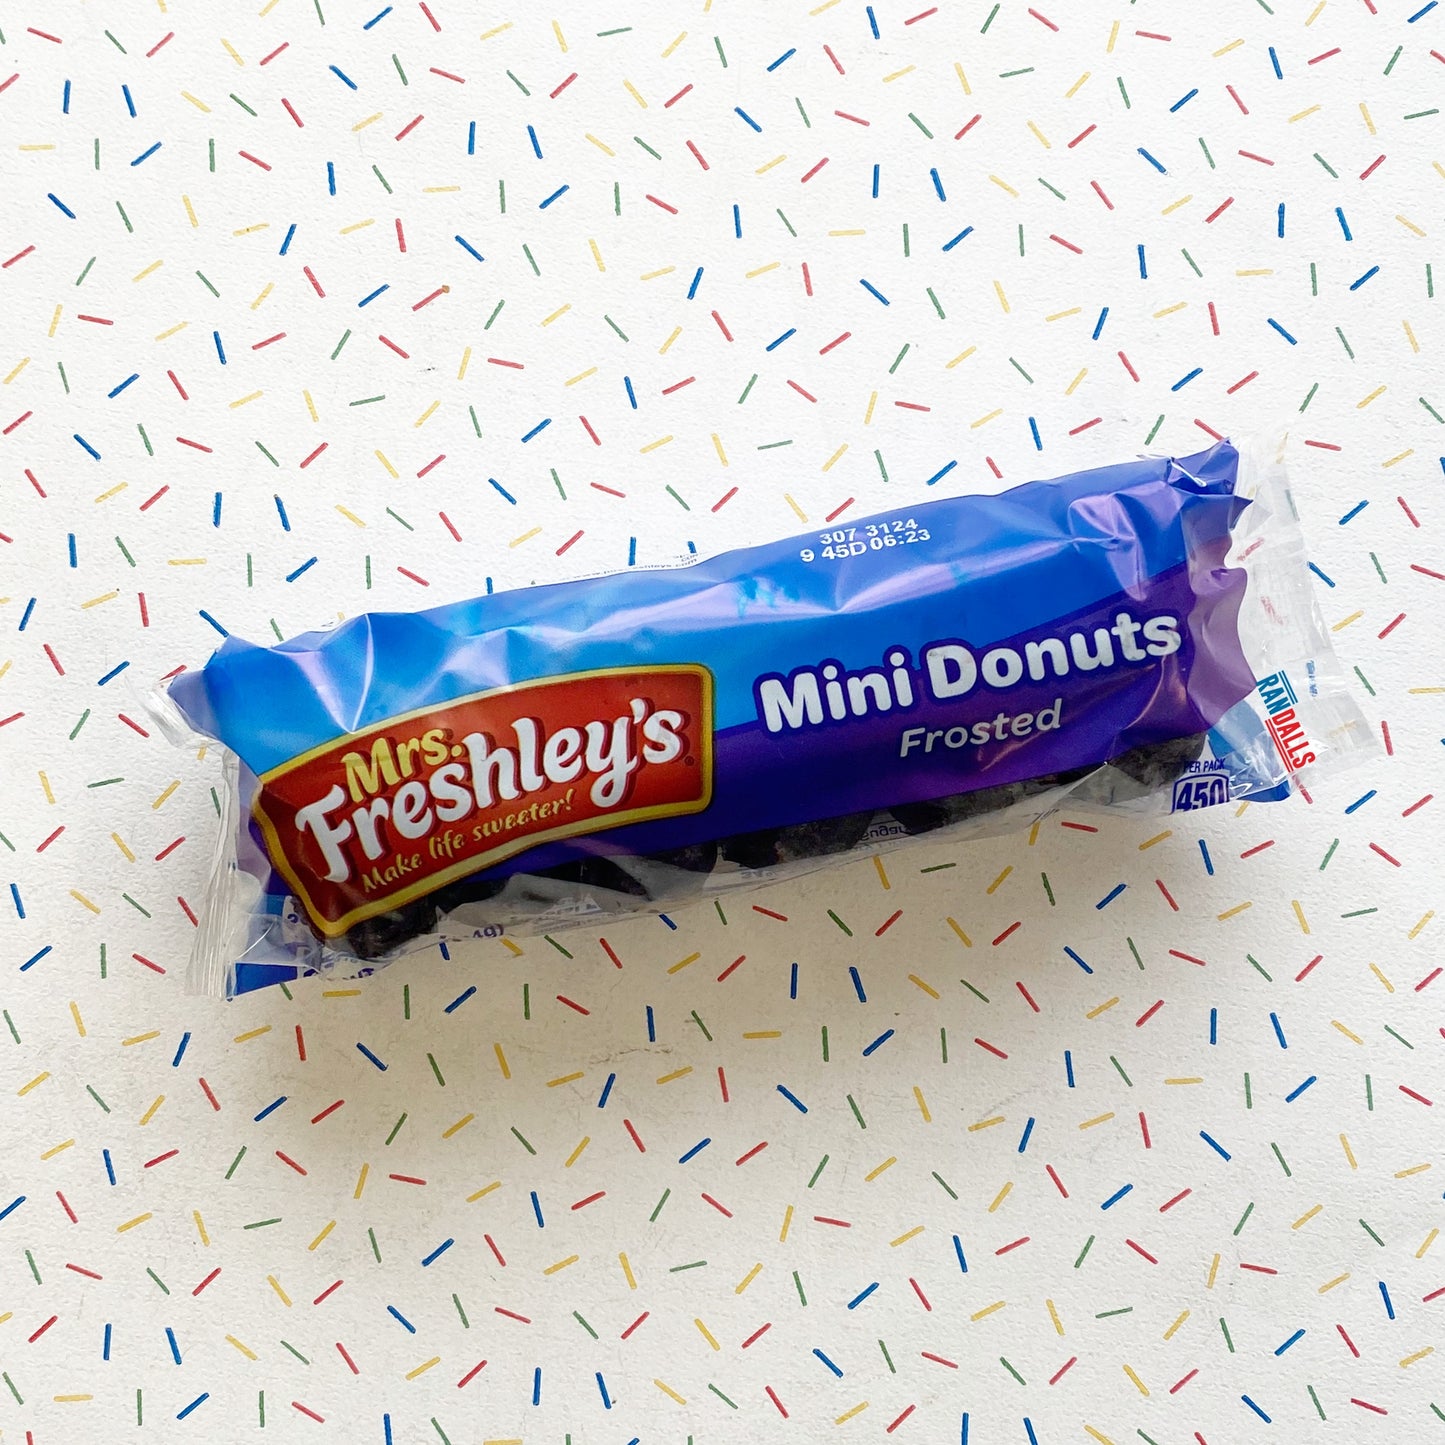 mrs freshley's donuts, mrs freshley's mini donuts, frosted mini donuts, mrs freshley's make life sweeter, doughnuts, american donuts, randalls,